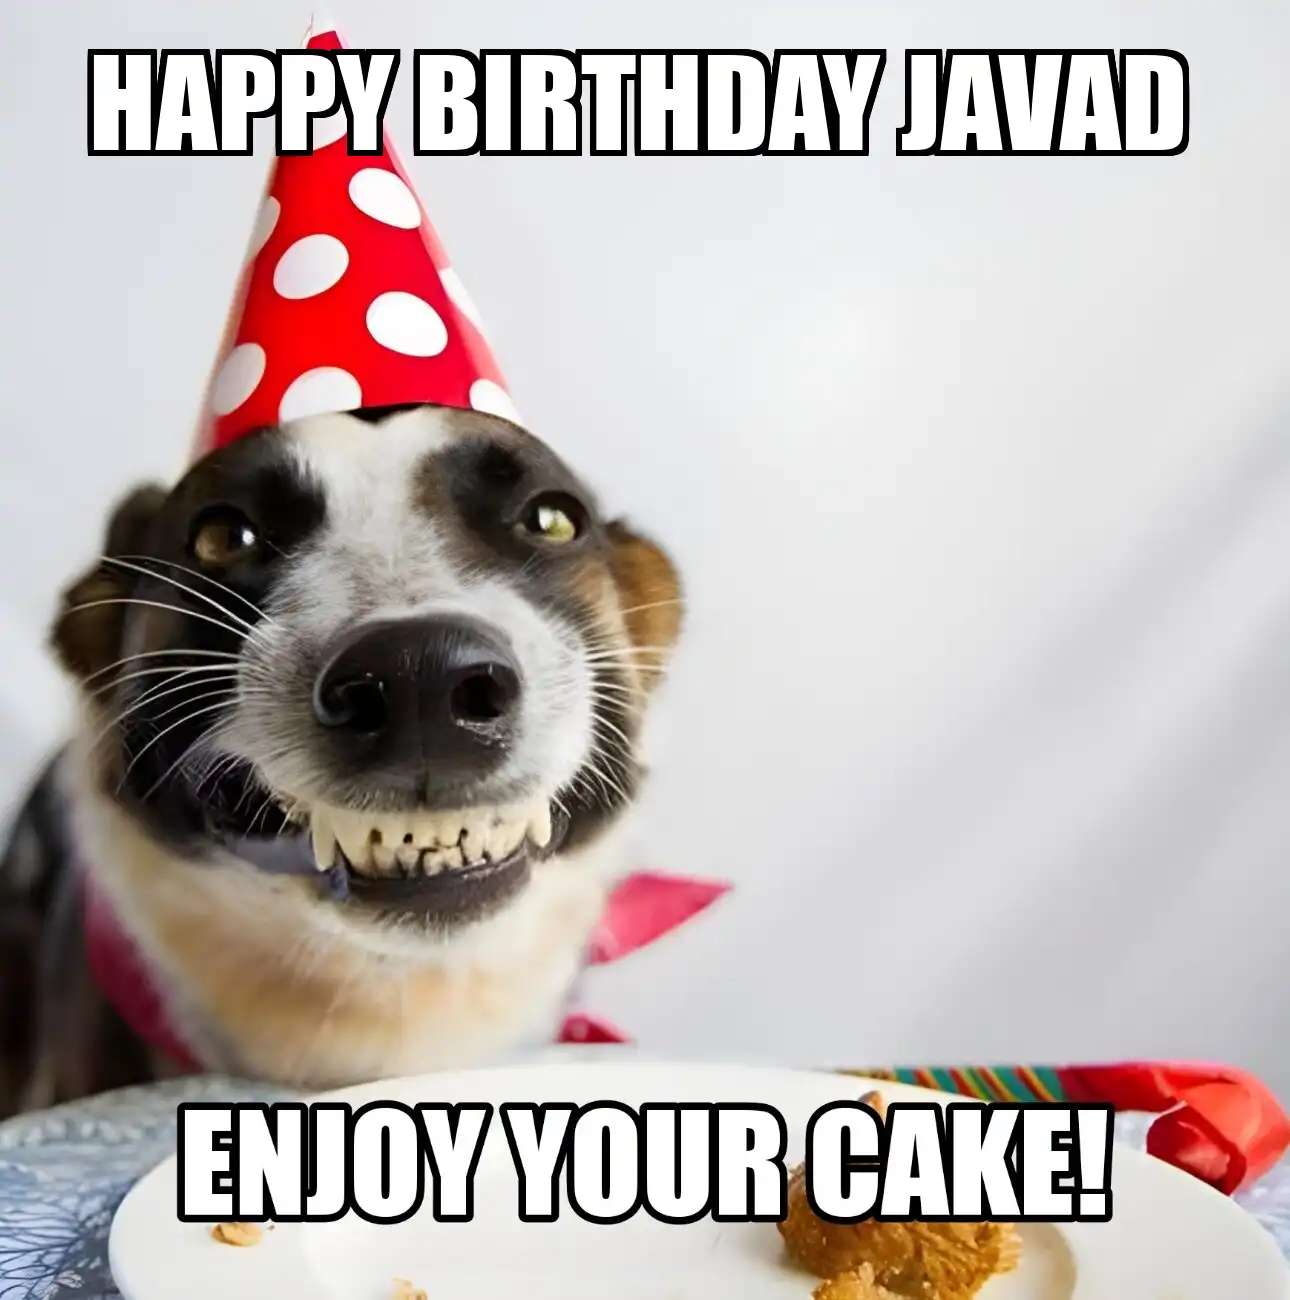 Happy Birthday Javad Enjoy Your Cake Dog Meme